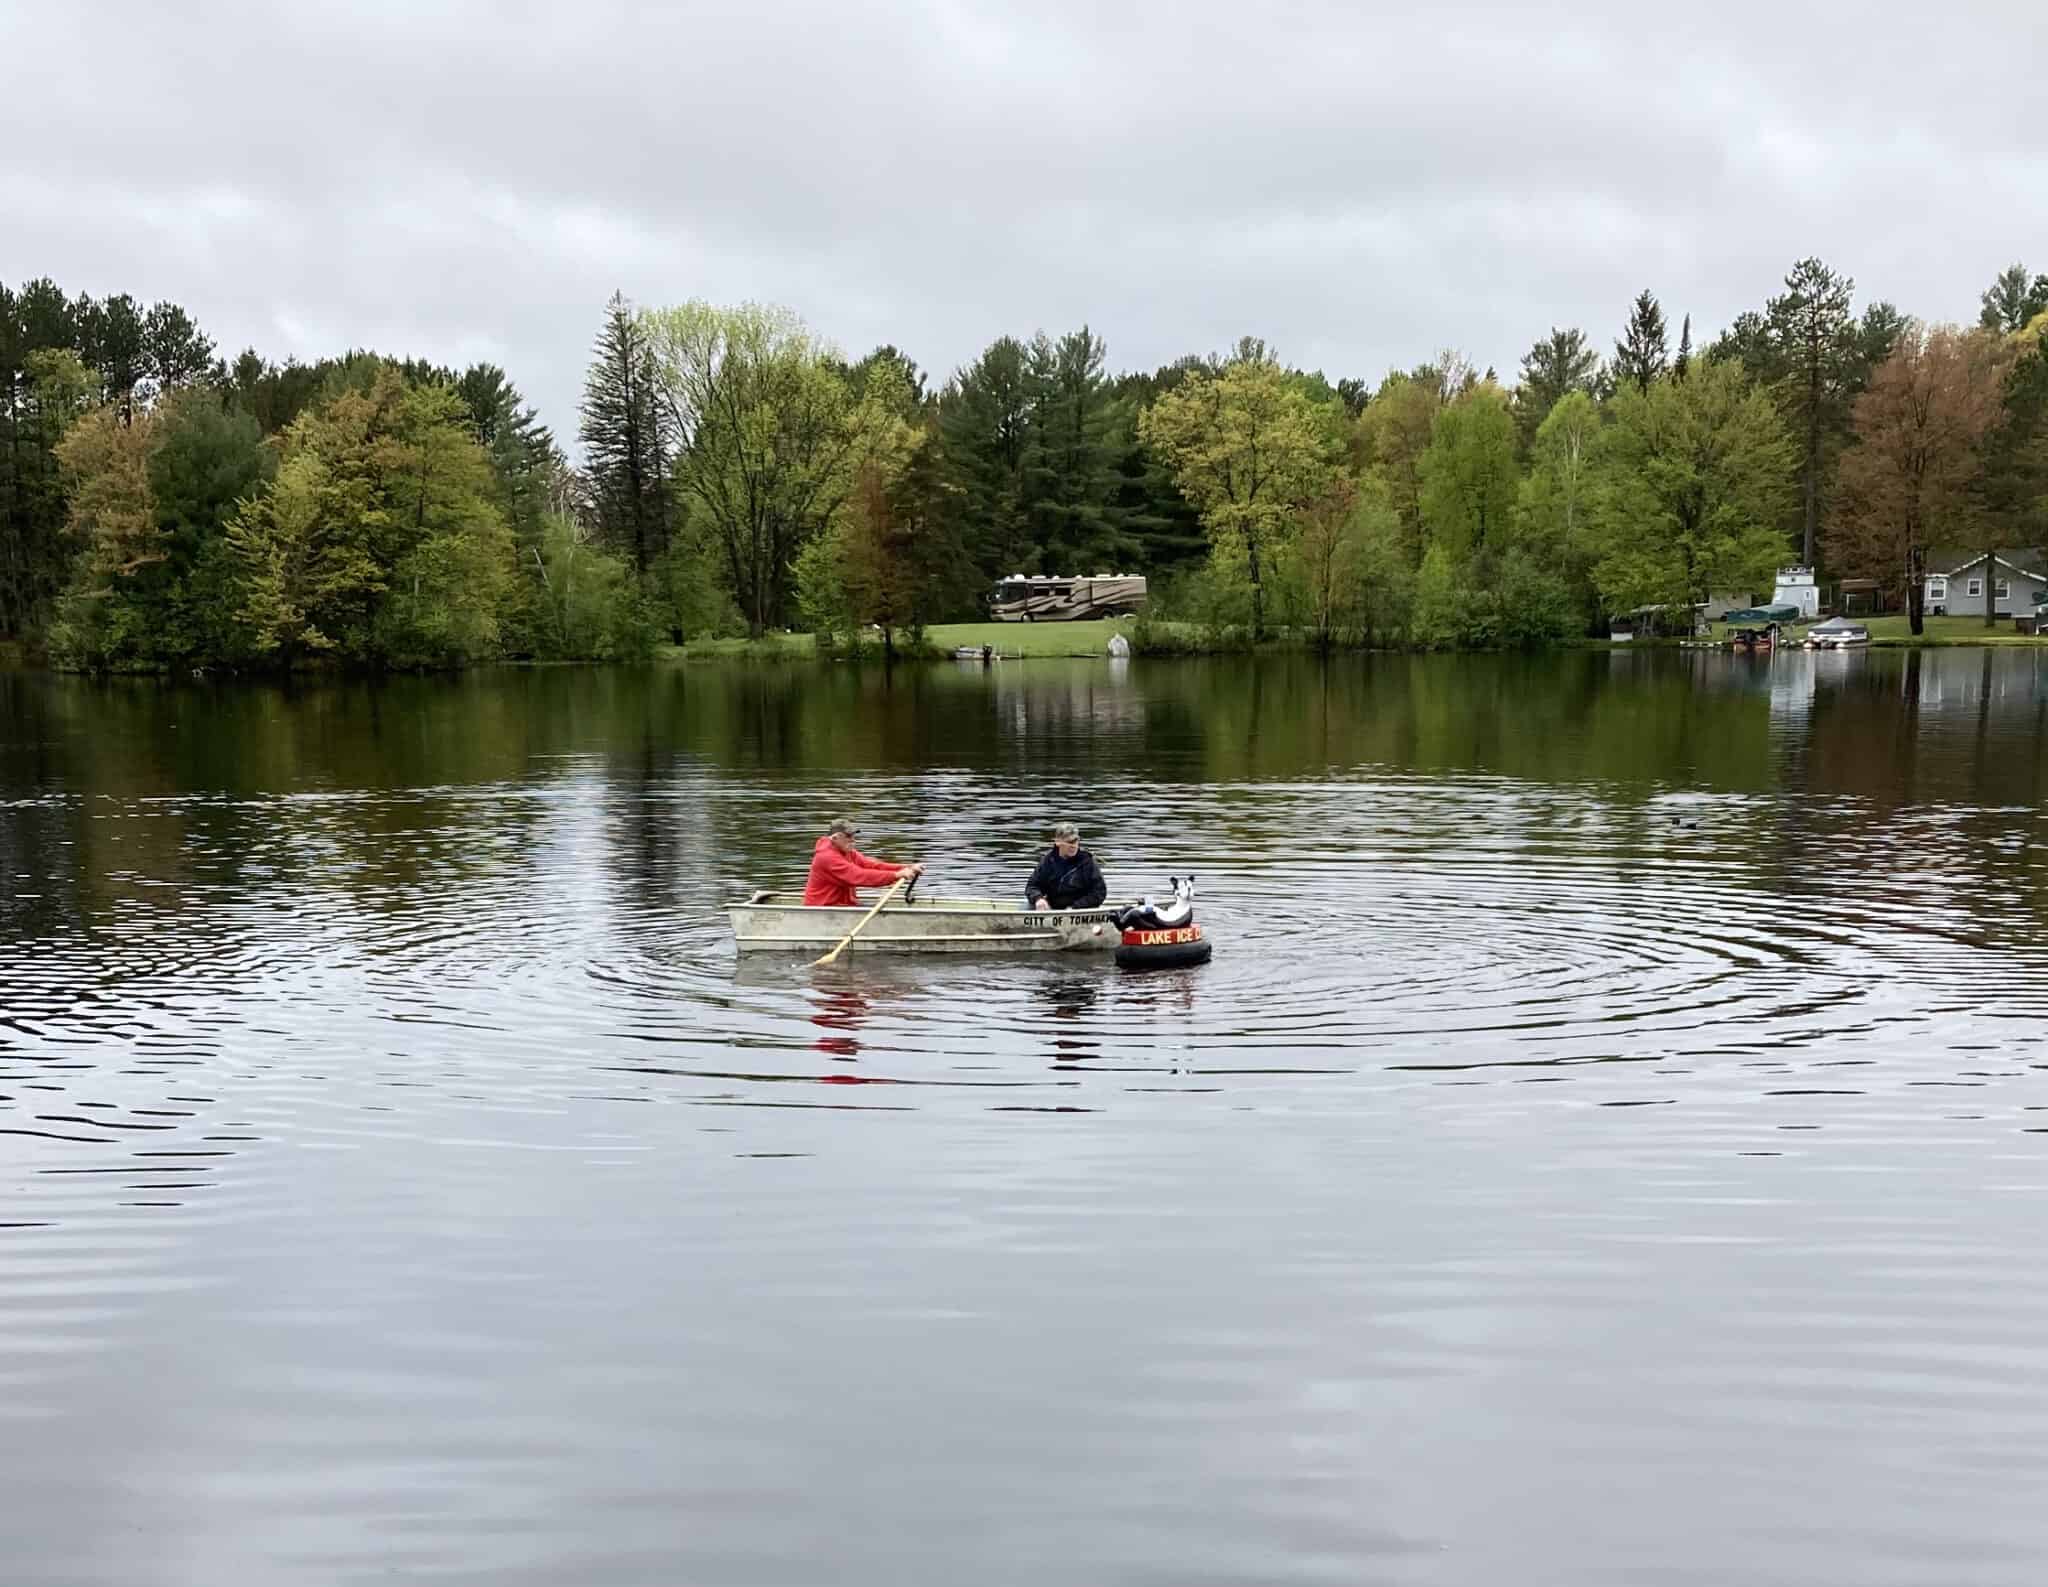 Legendary Lake Ice Bear makes return to Sawdy Pond